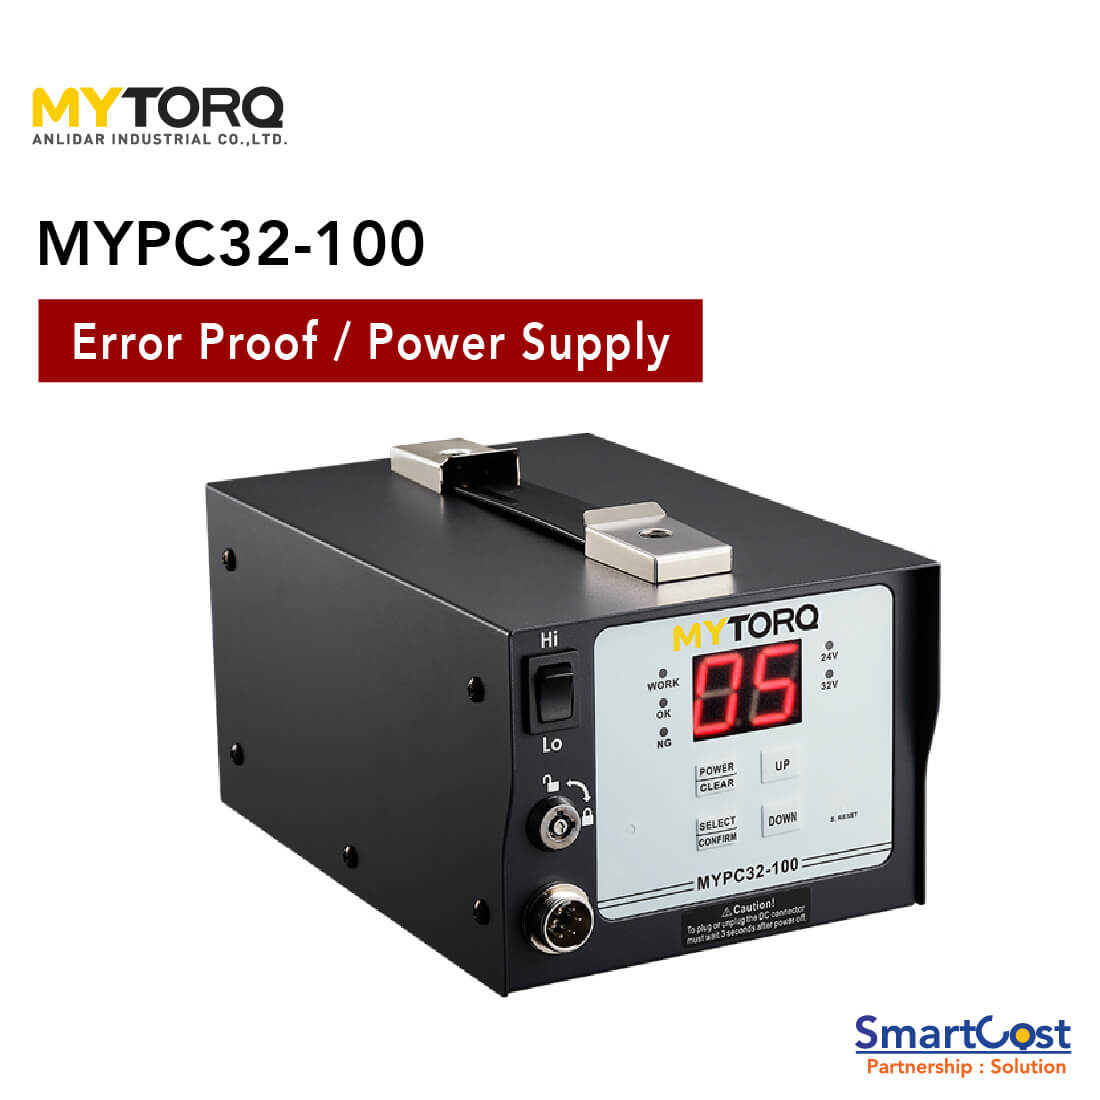 MYPC32-100